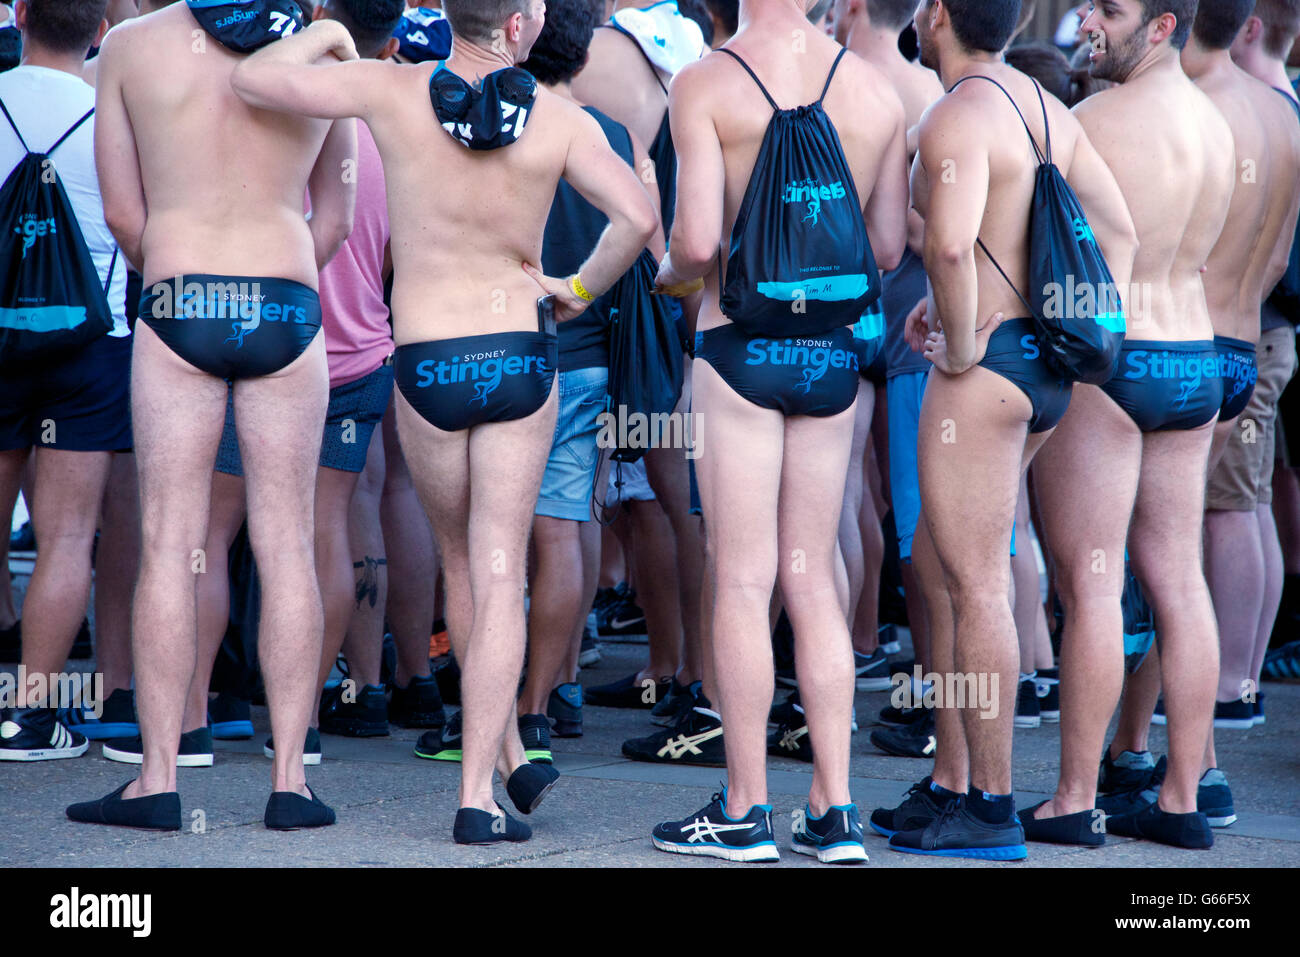 Gay Men At Parade Fotos e Imágenes de stock - Alamy